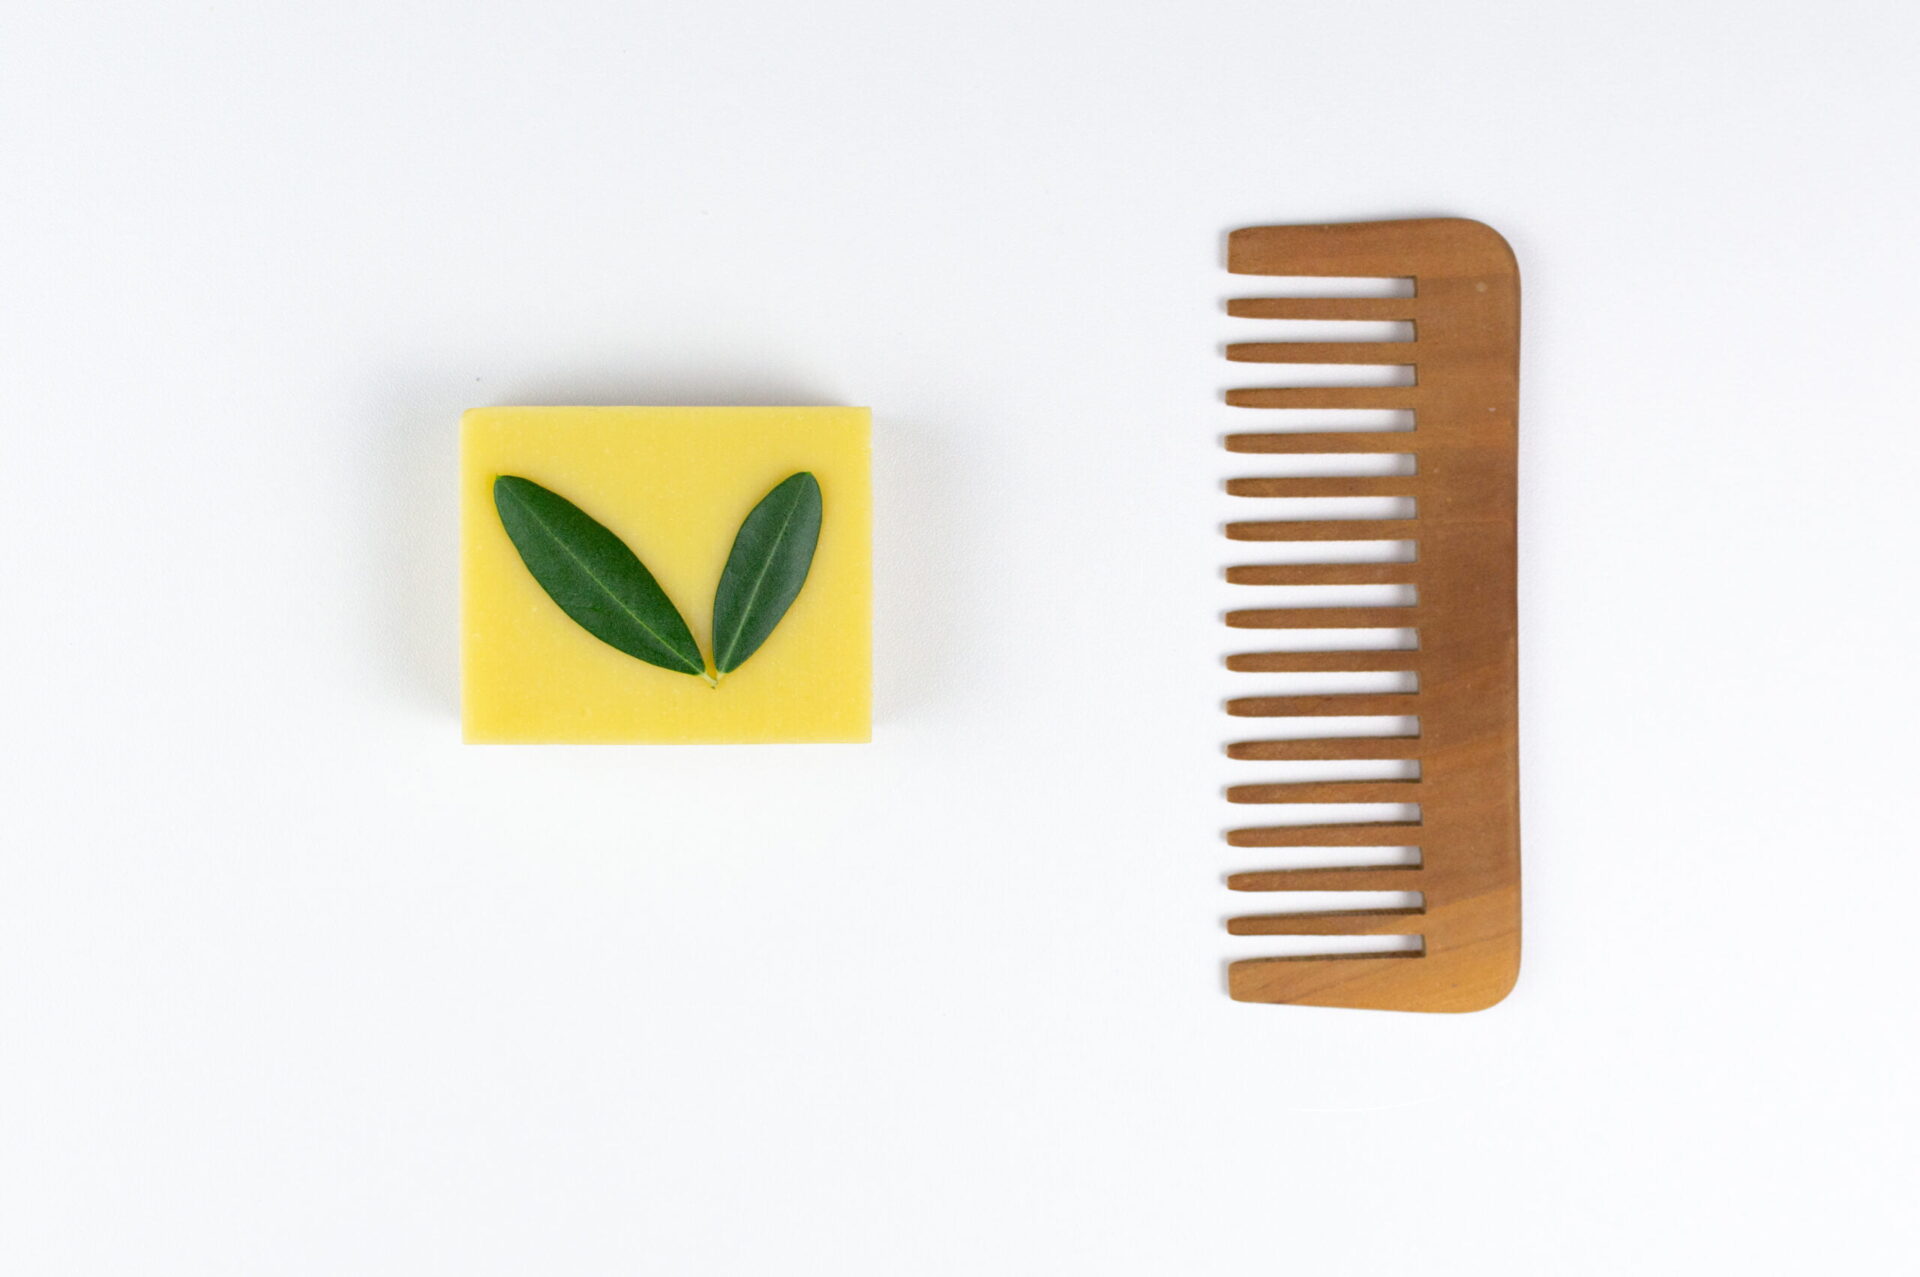 Eco natural and biologic soap and solid shampoo bars